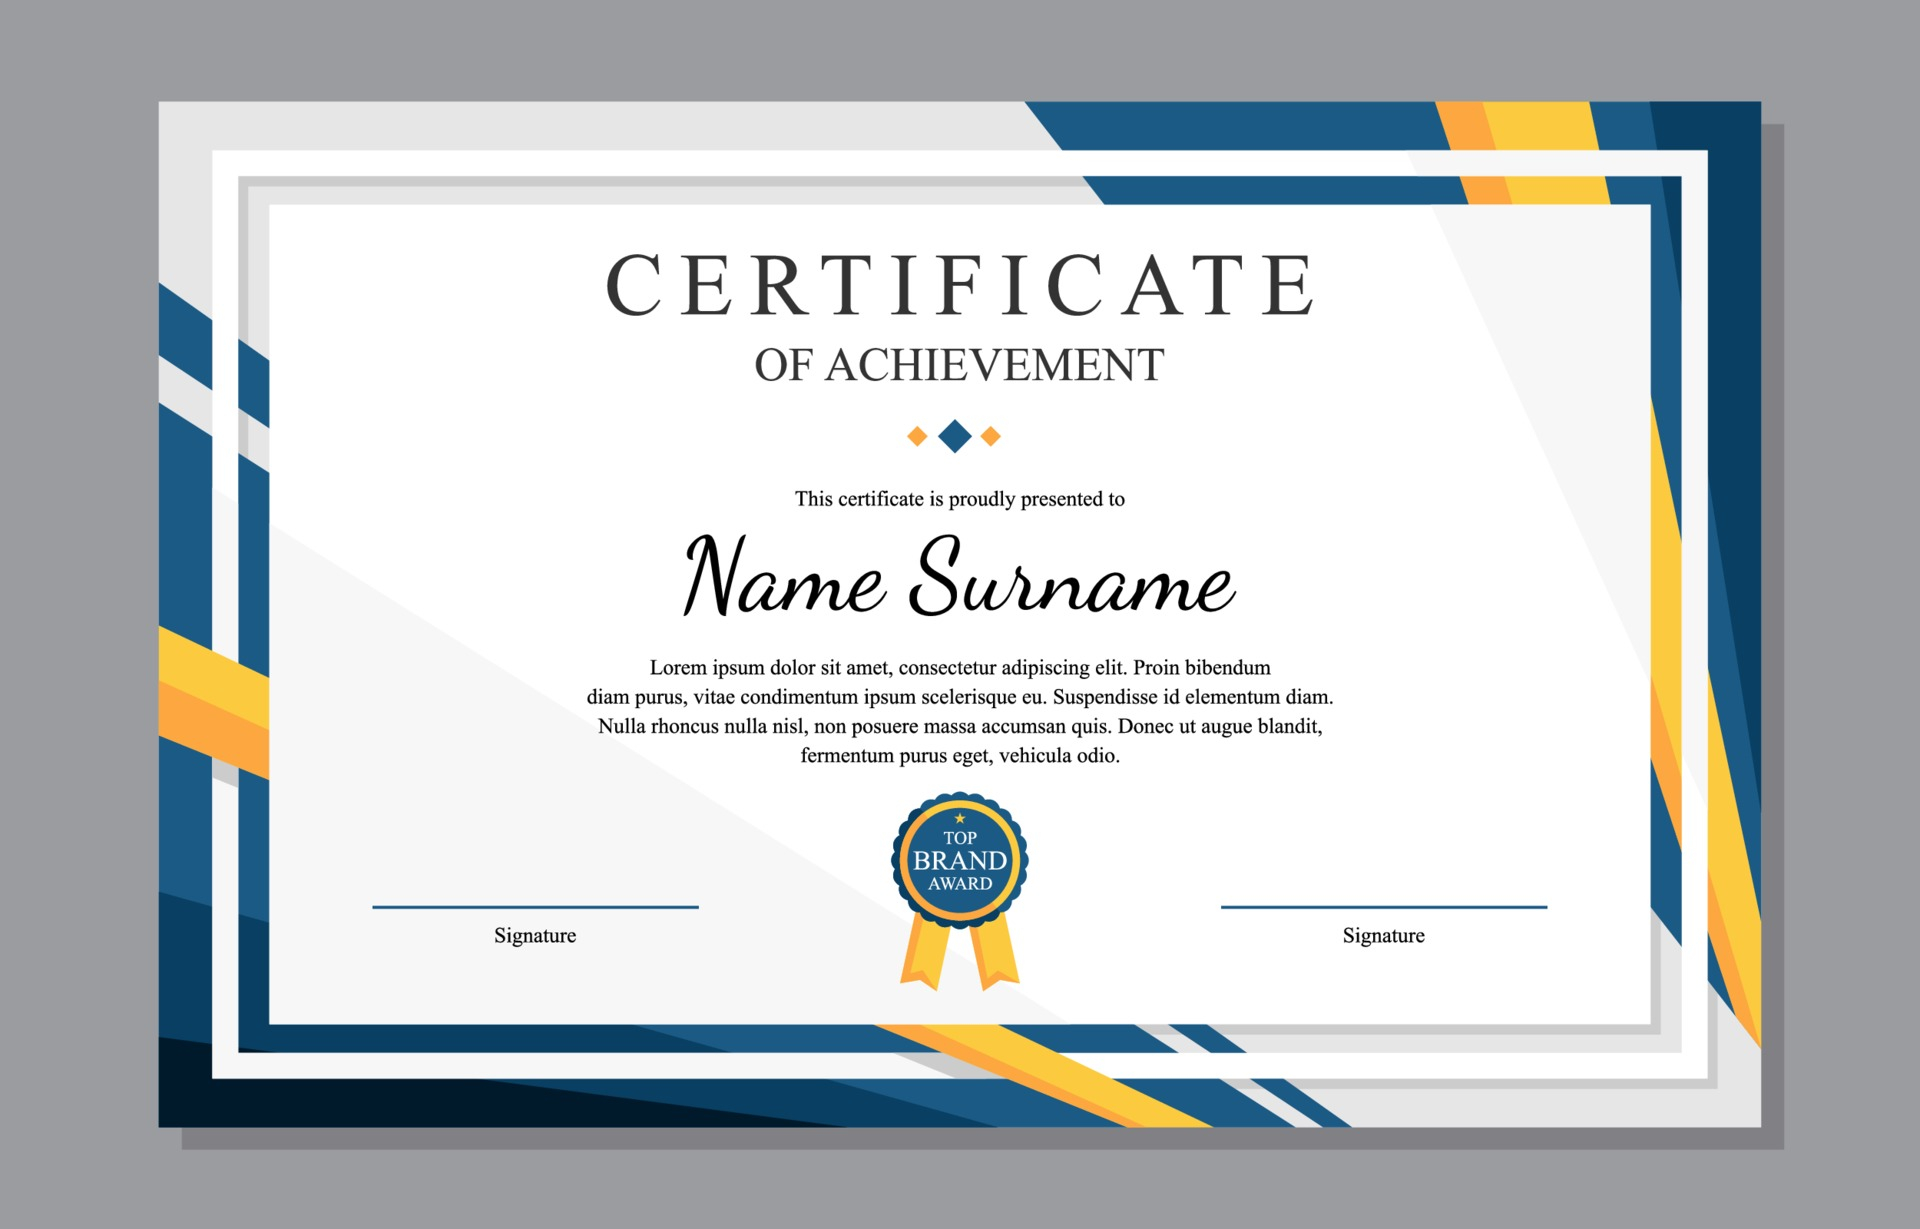 Certificate Templates, Free Certificate Designs Intended For Elegant Certificate Templates Free